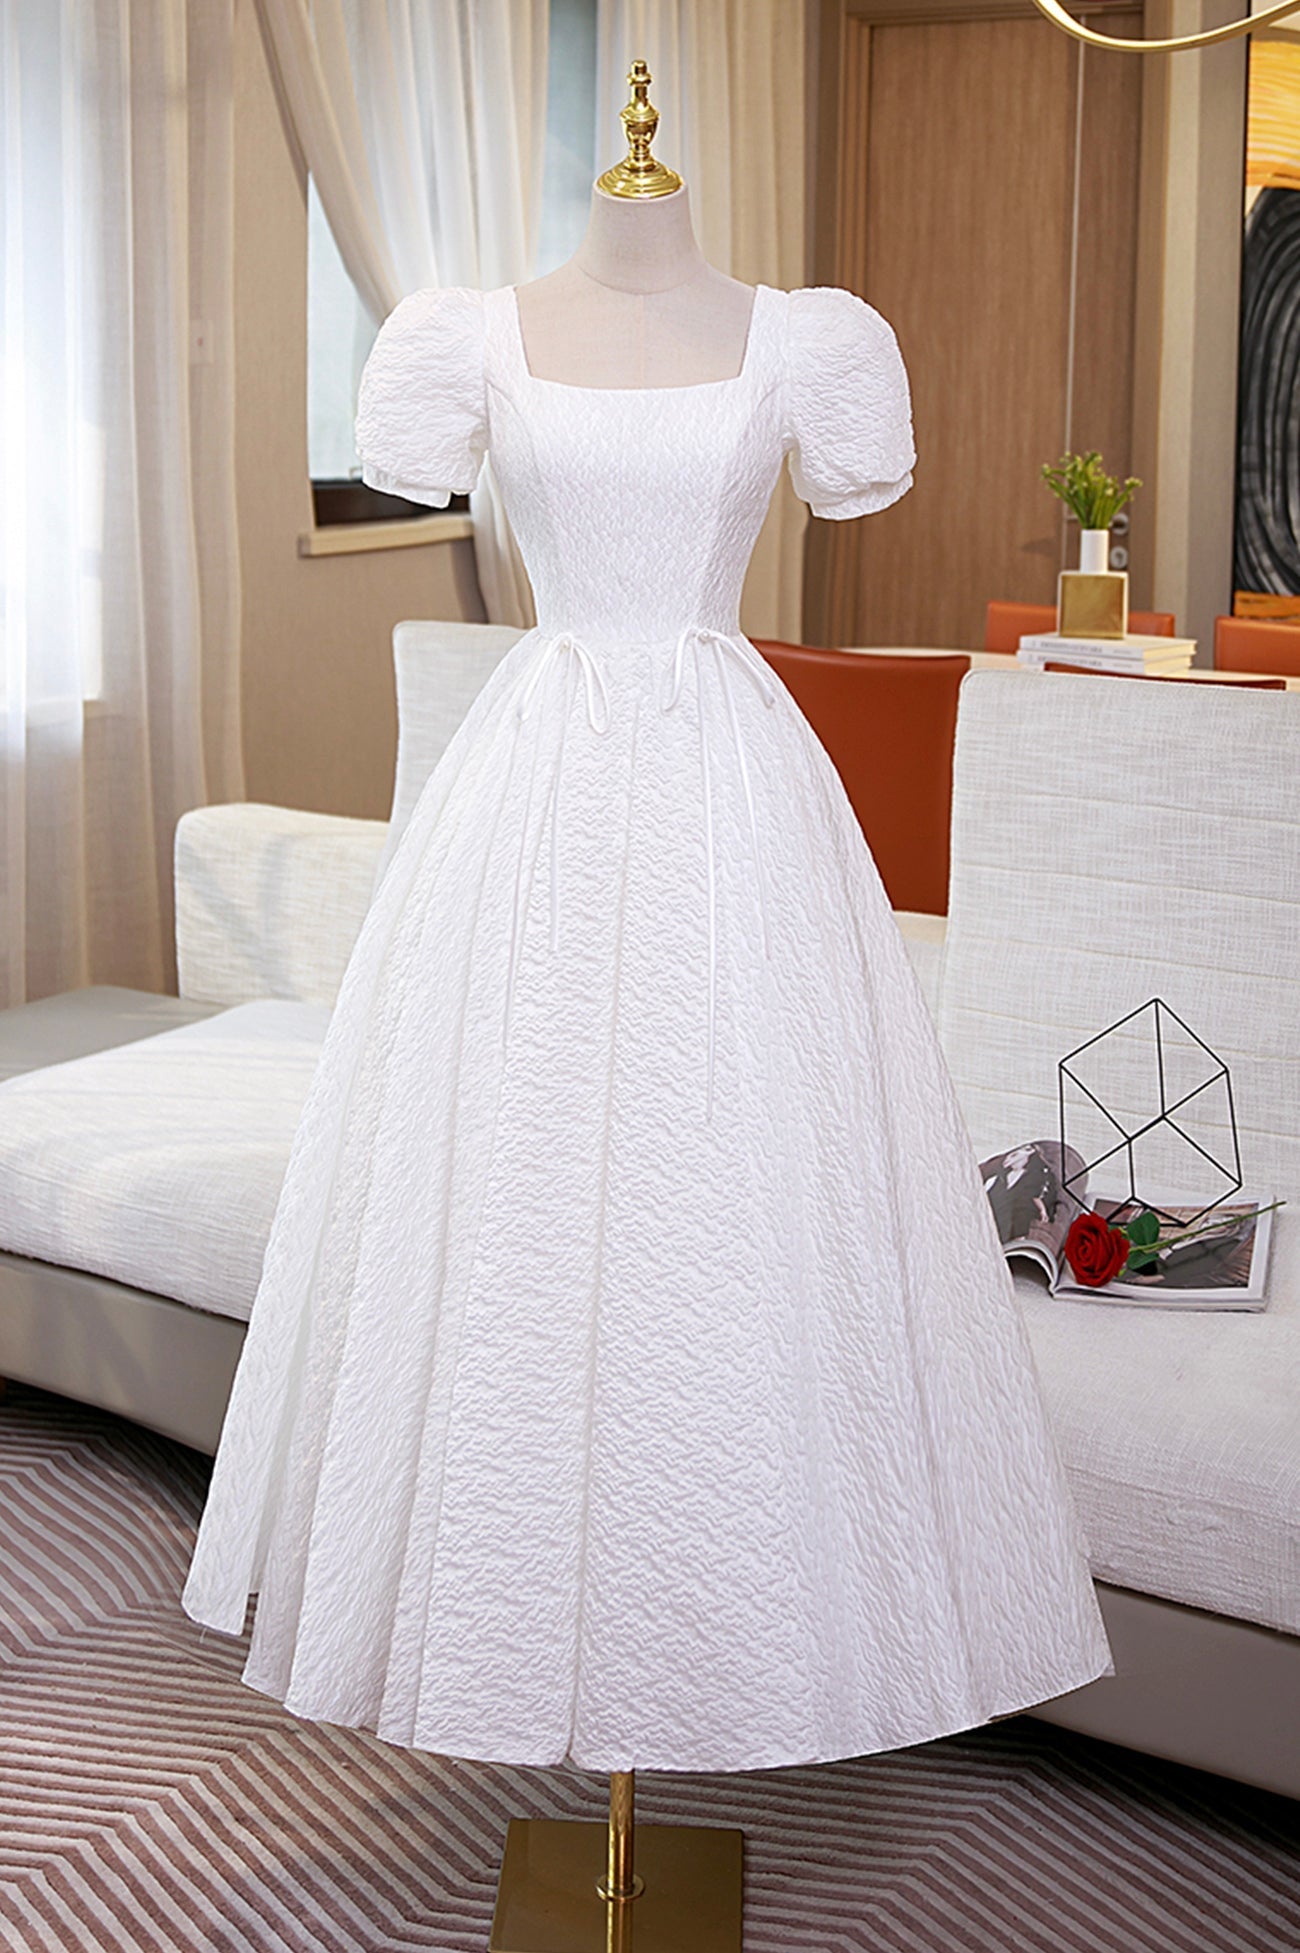 Homecoming Dresses Pockets, White A-Line Homecoming Dress, Cute Short Sleeve Evening Dress